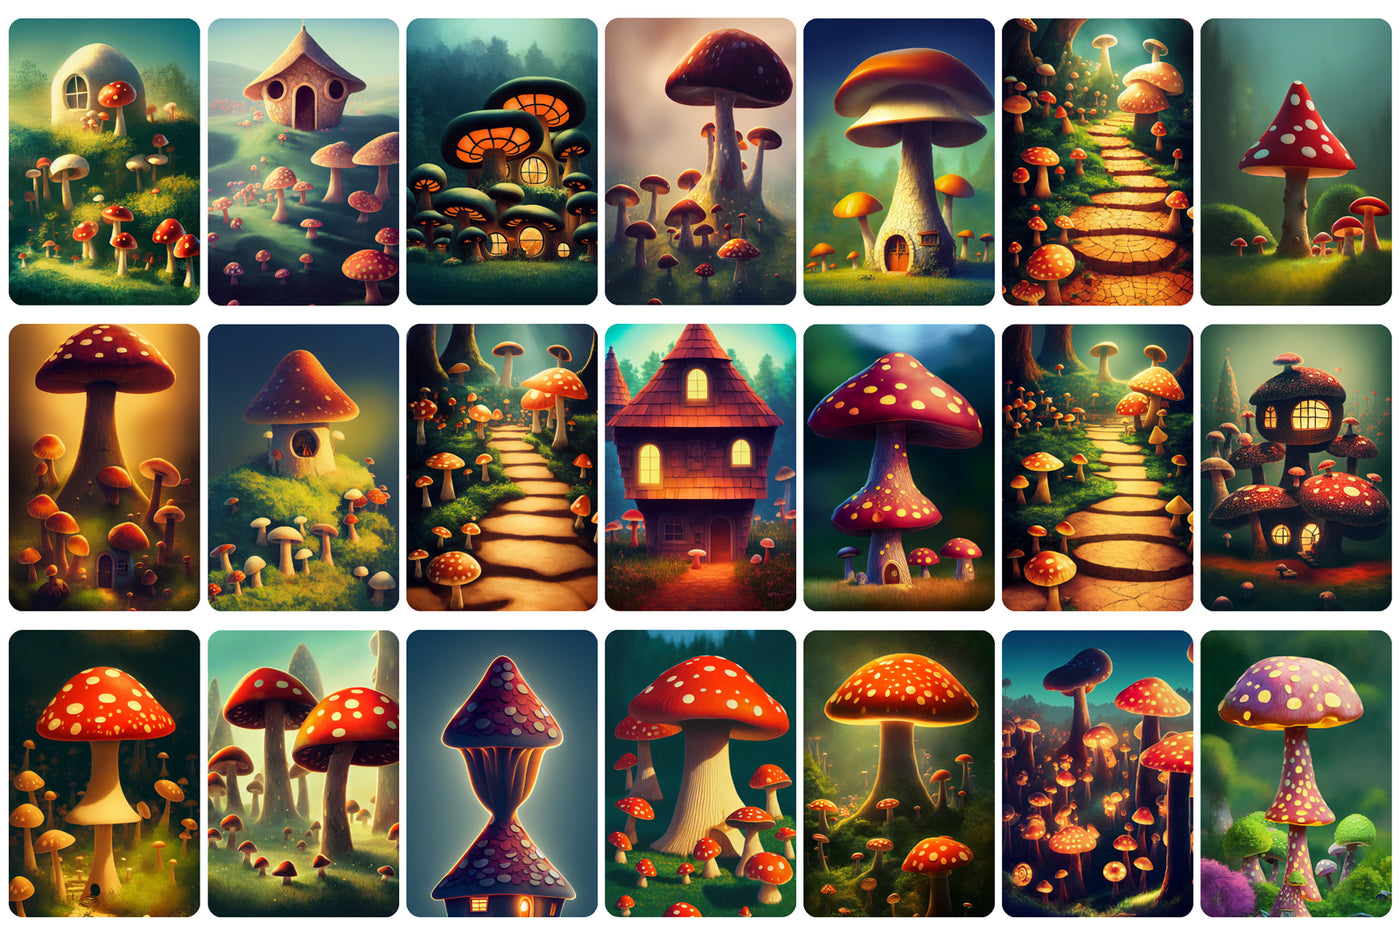 110+ Fantasy Magic Wonderland Mushrooms Bundle - Artixty